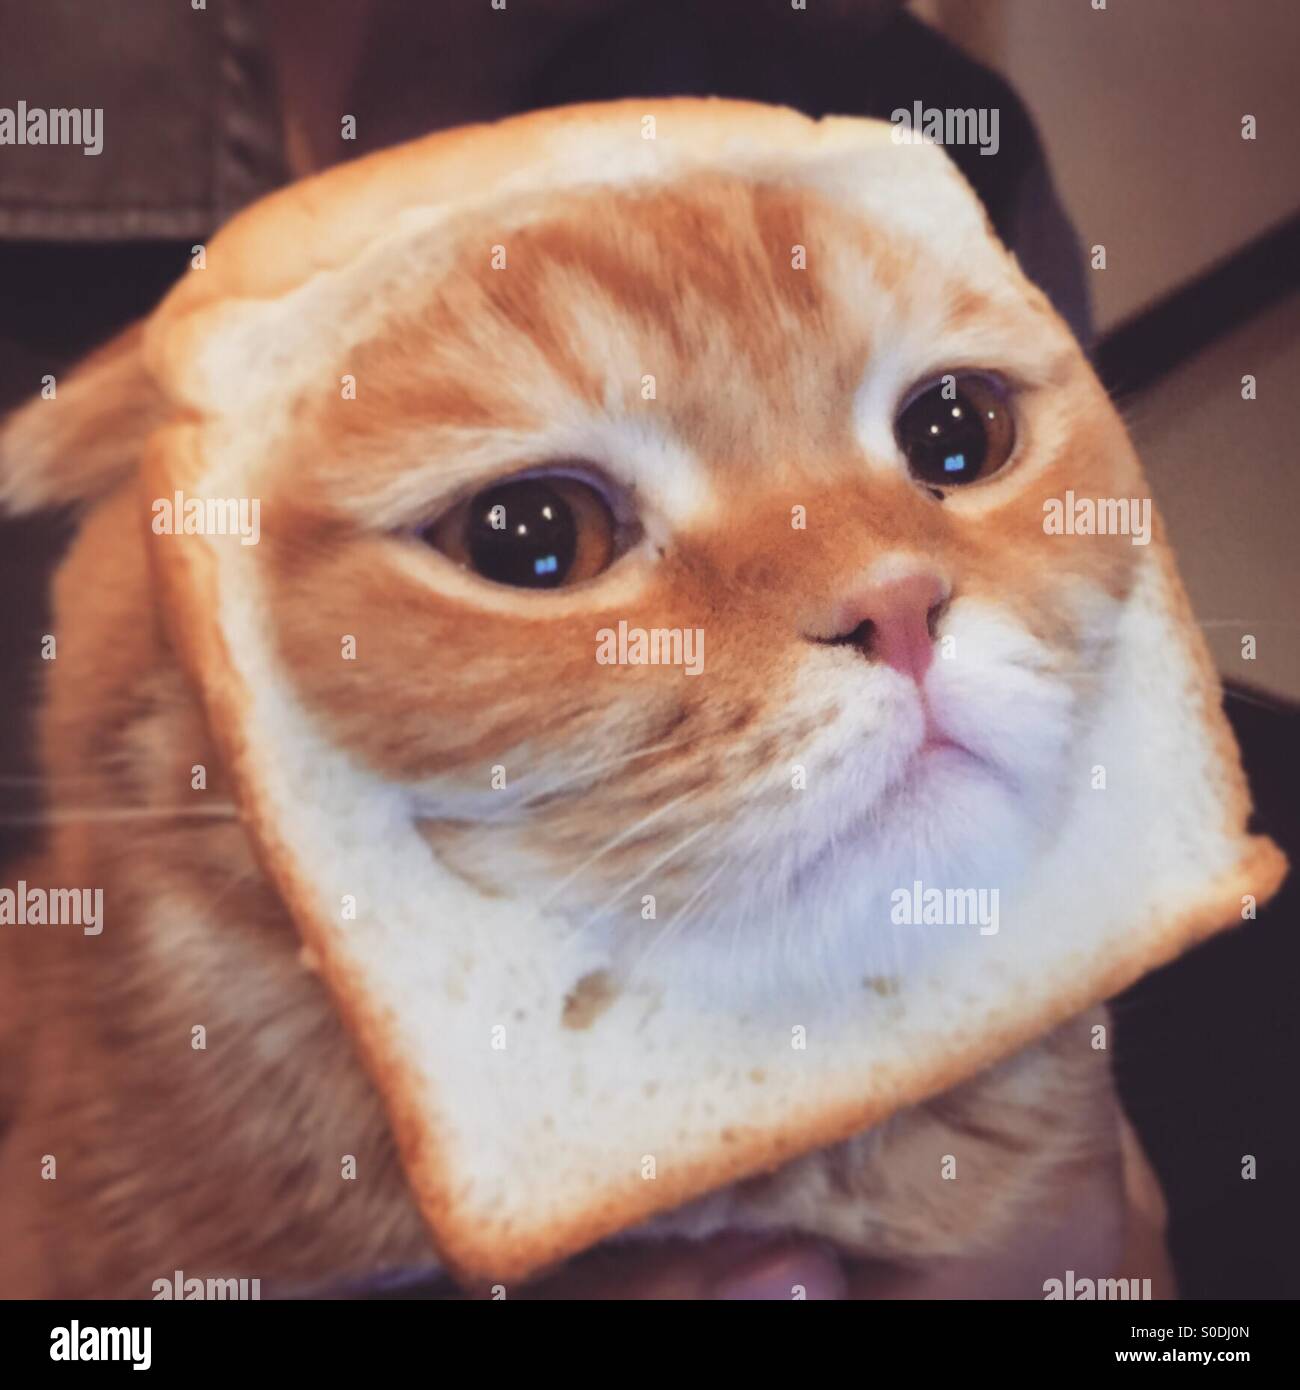 A cat in a bread Stock Photo